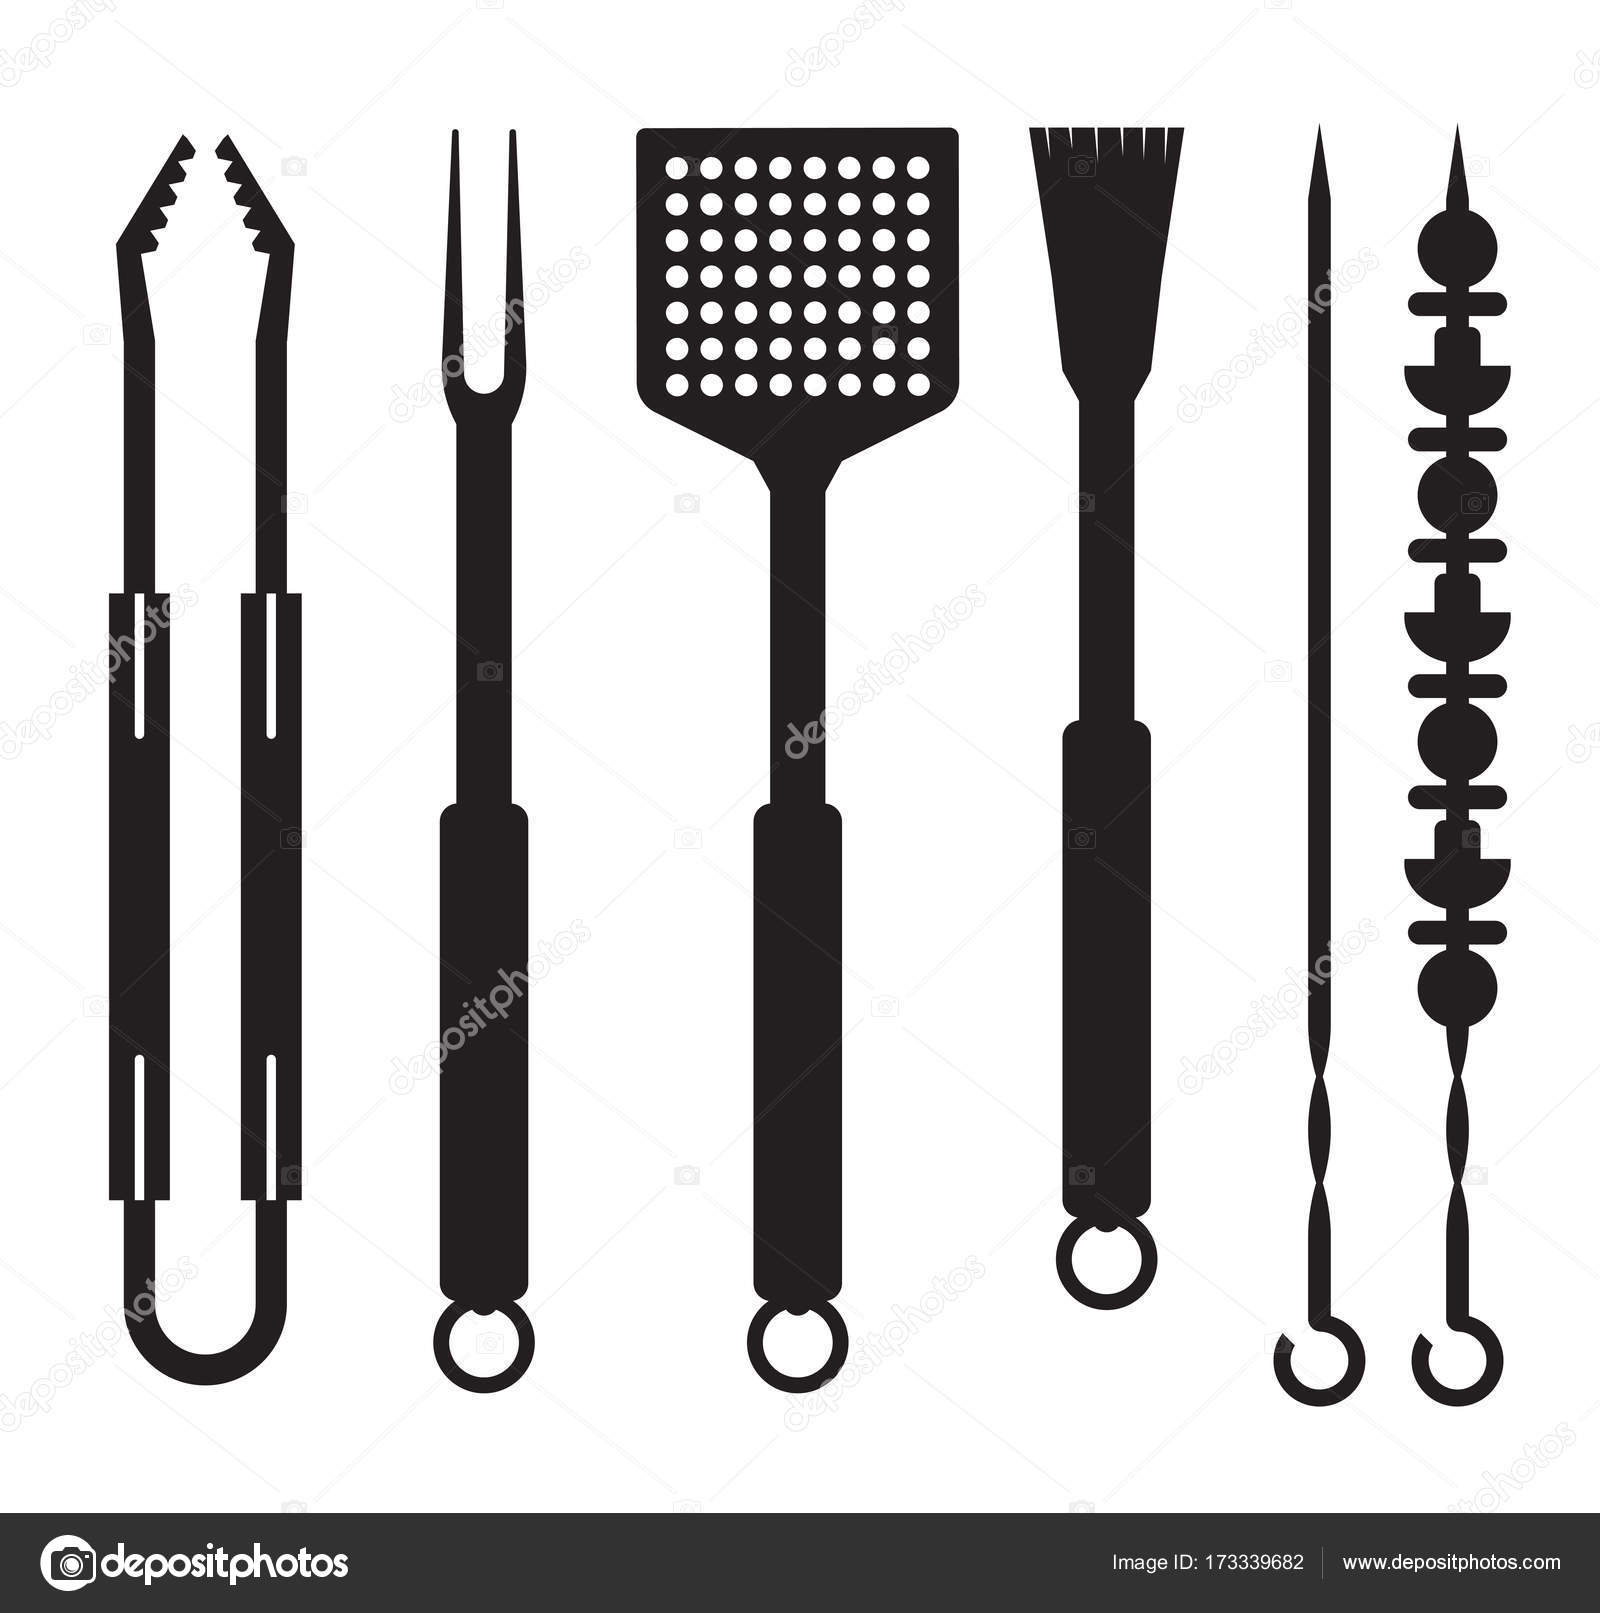 https://st3.depositphotos.com/7723892/17333/v/1600/depositphotos_173339682-stock-illustration-grill-barbecue-utensils-icons-outline.jpg